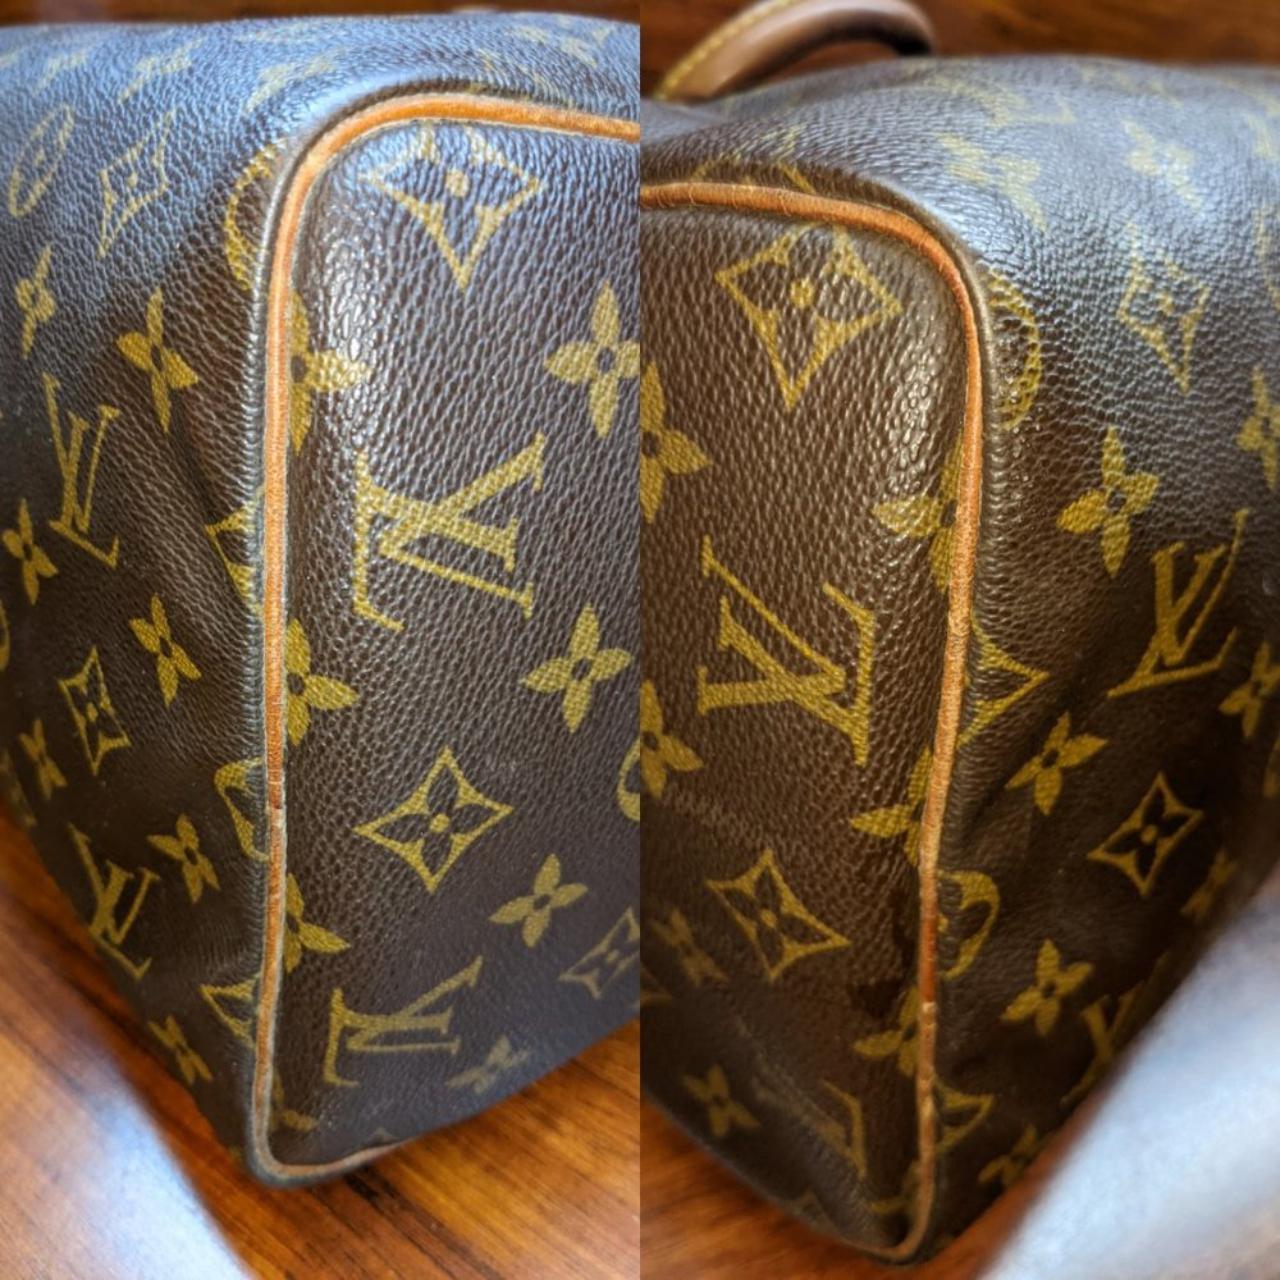 Authentic Speedy 30 Louis Vuitton bag in damier - Depop